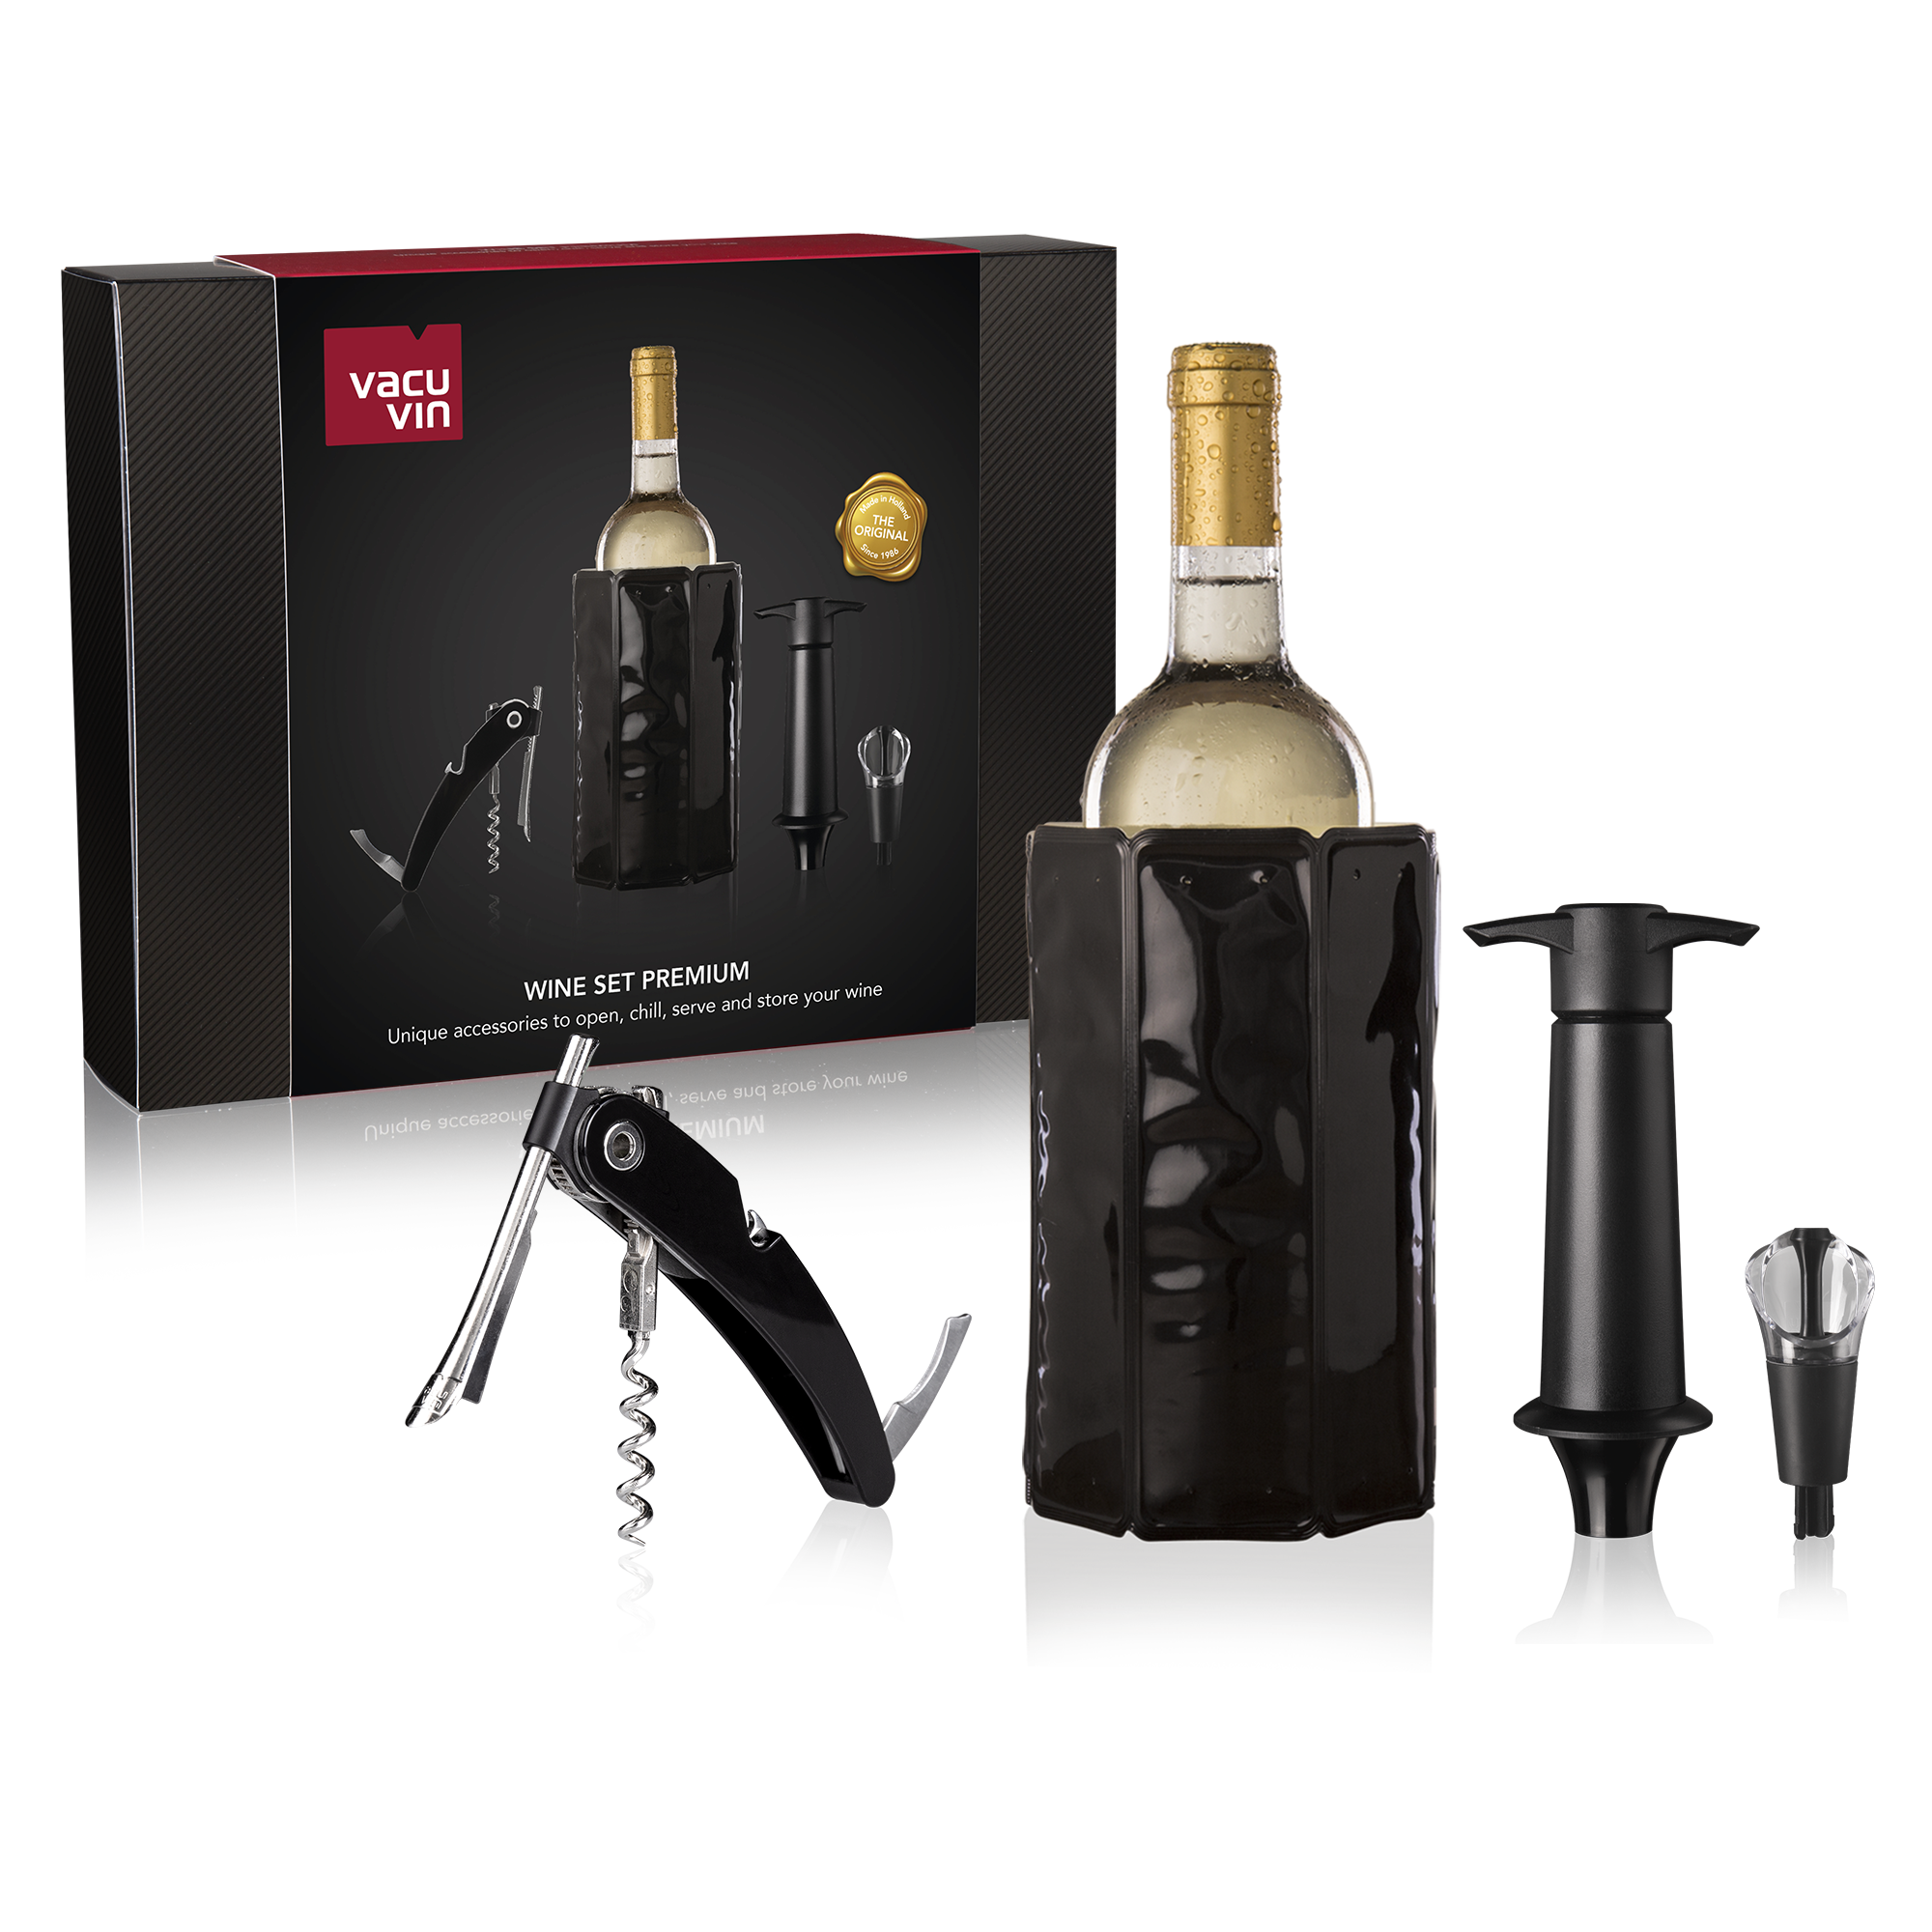 accu West melodie Vacu Vin Wine Set Premium (4 pcs), Gift Box kopen? | Cookinglife